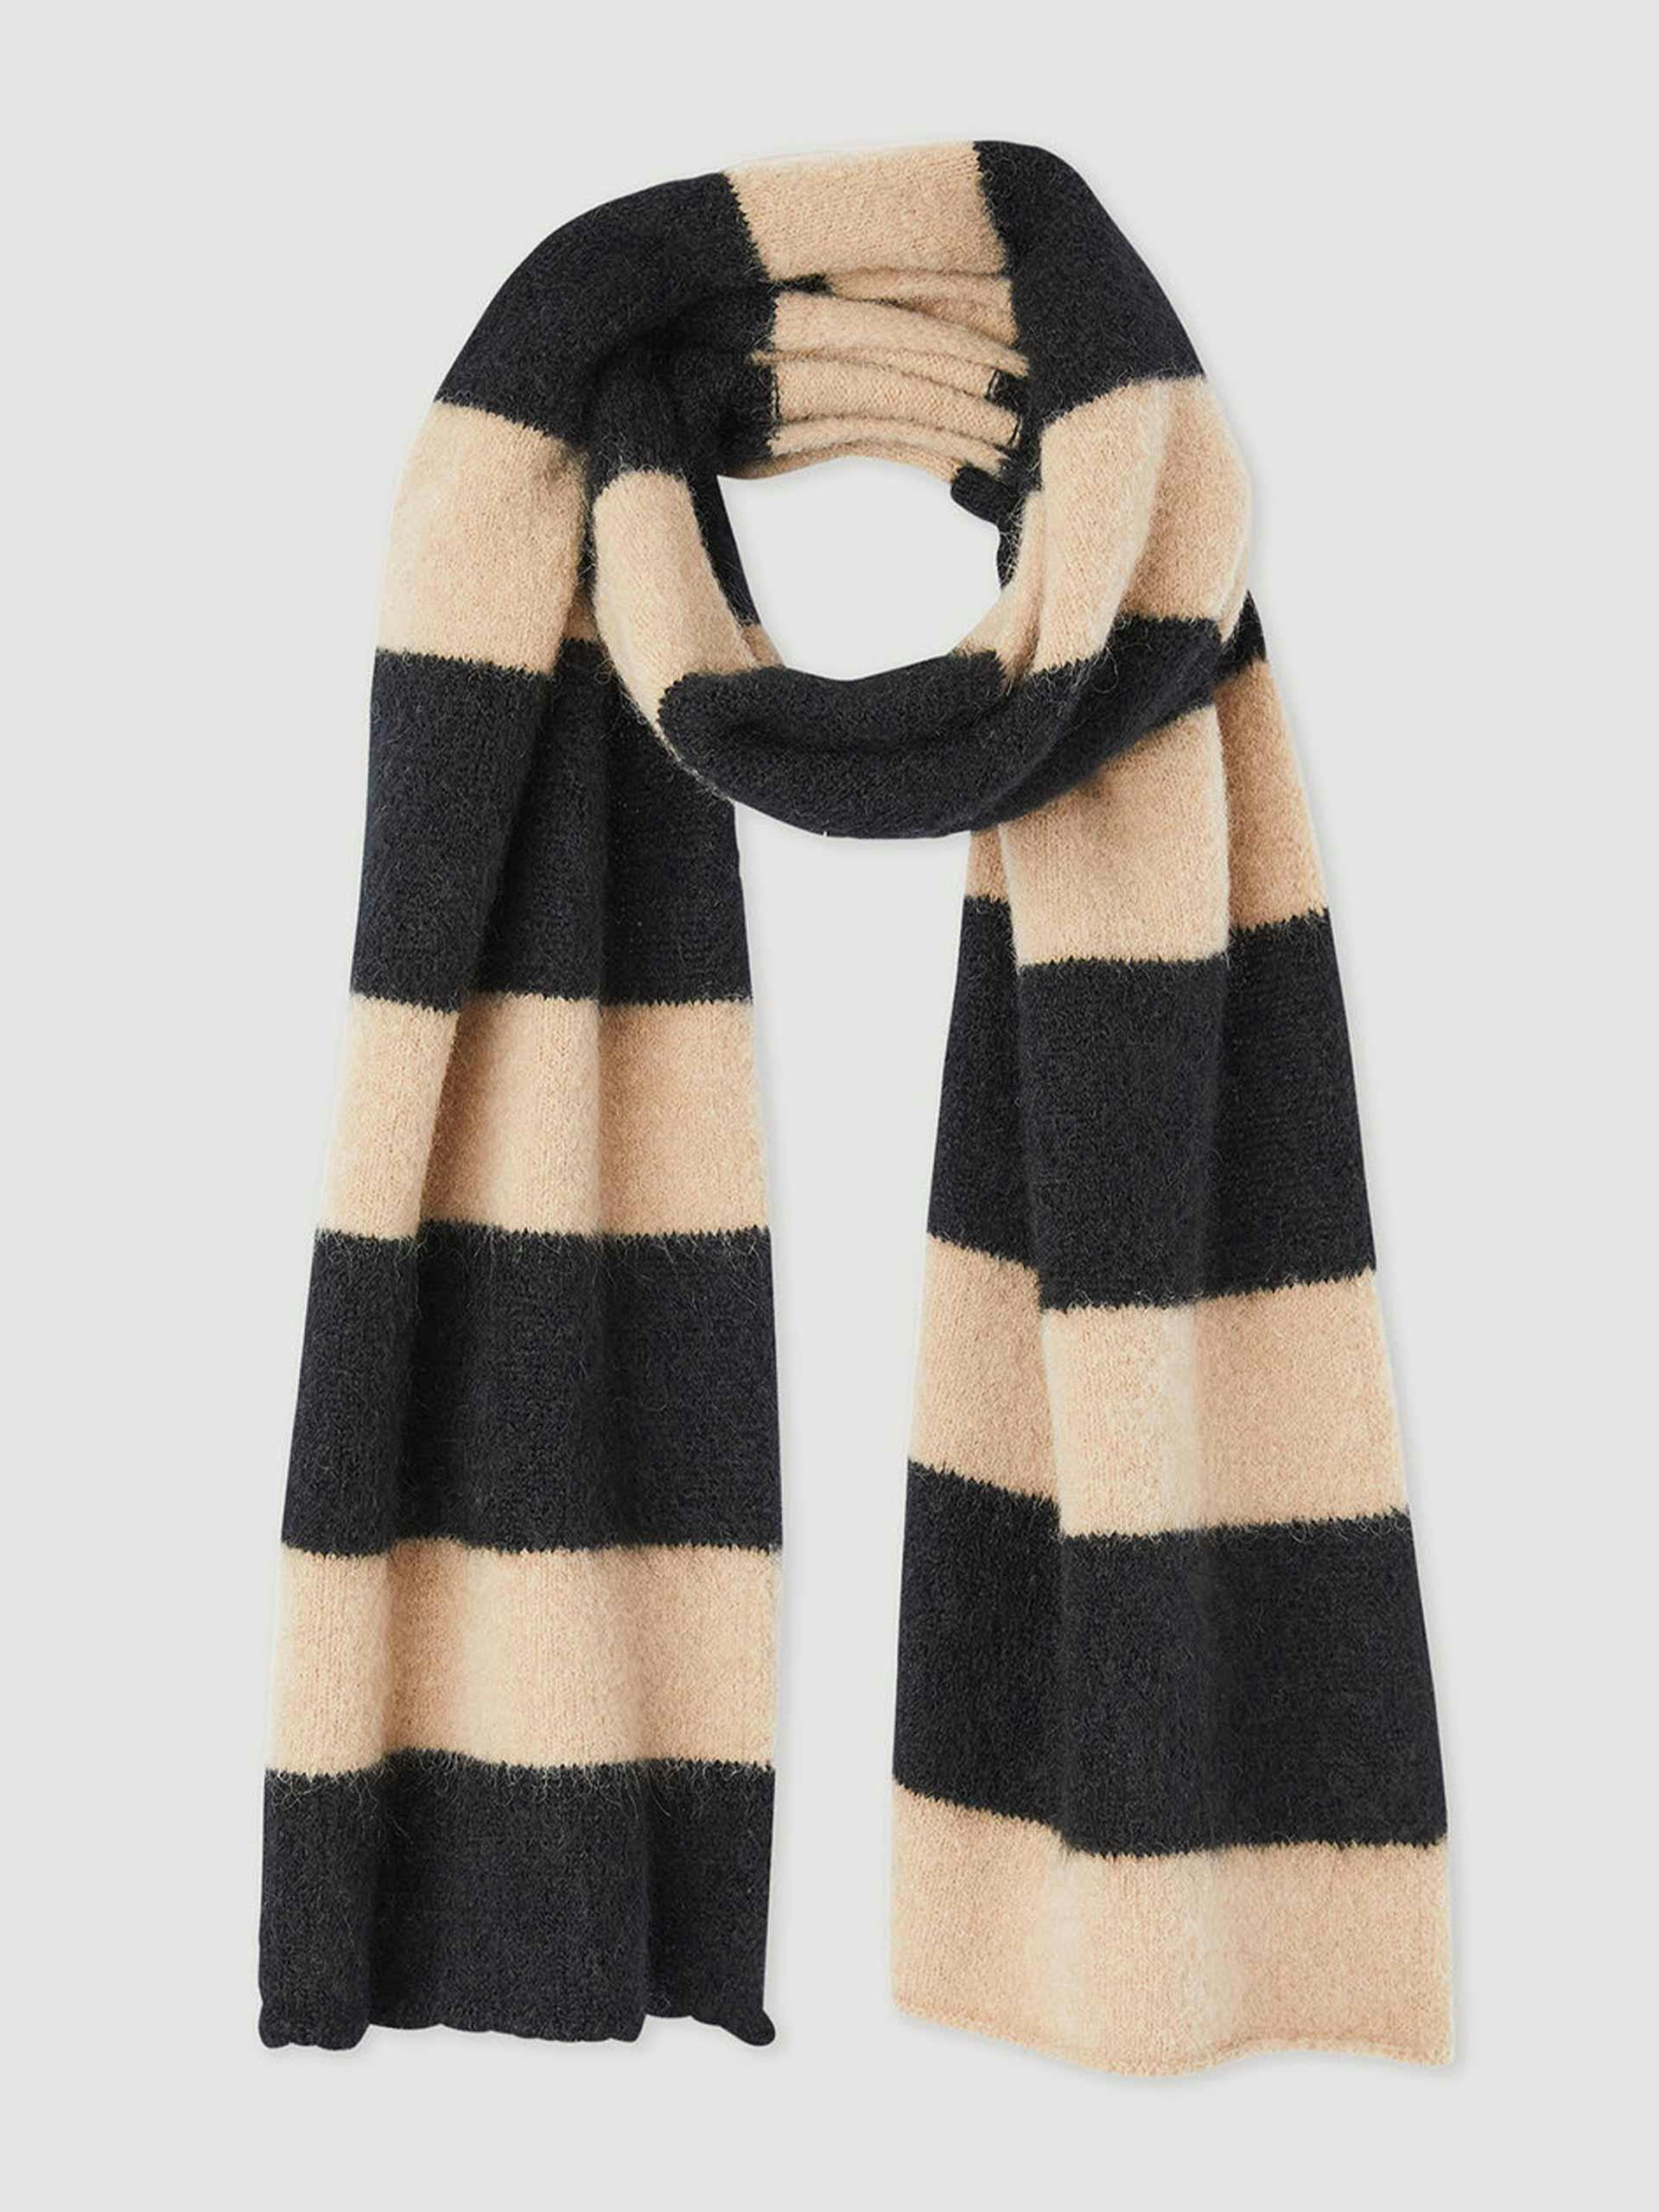 Black and cream striped scarf